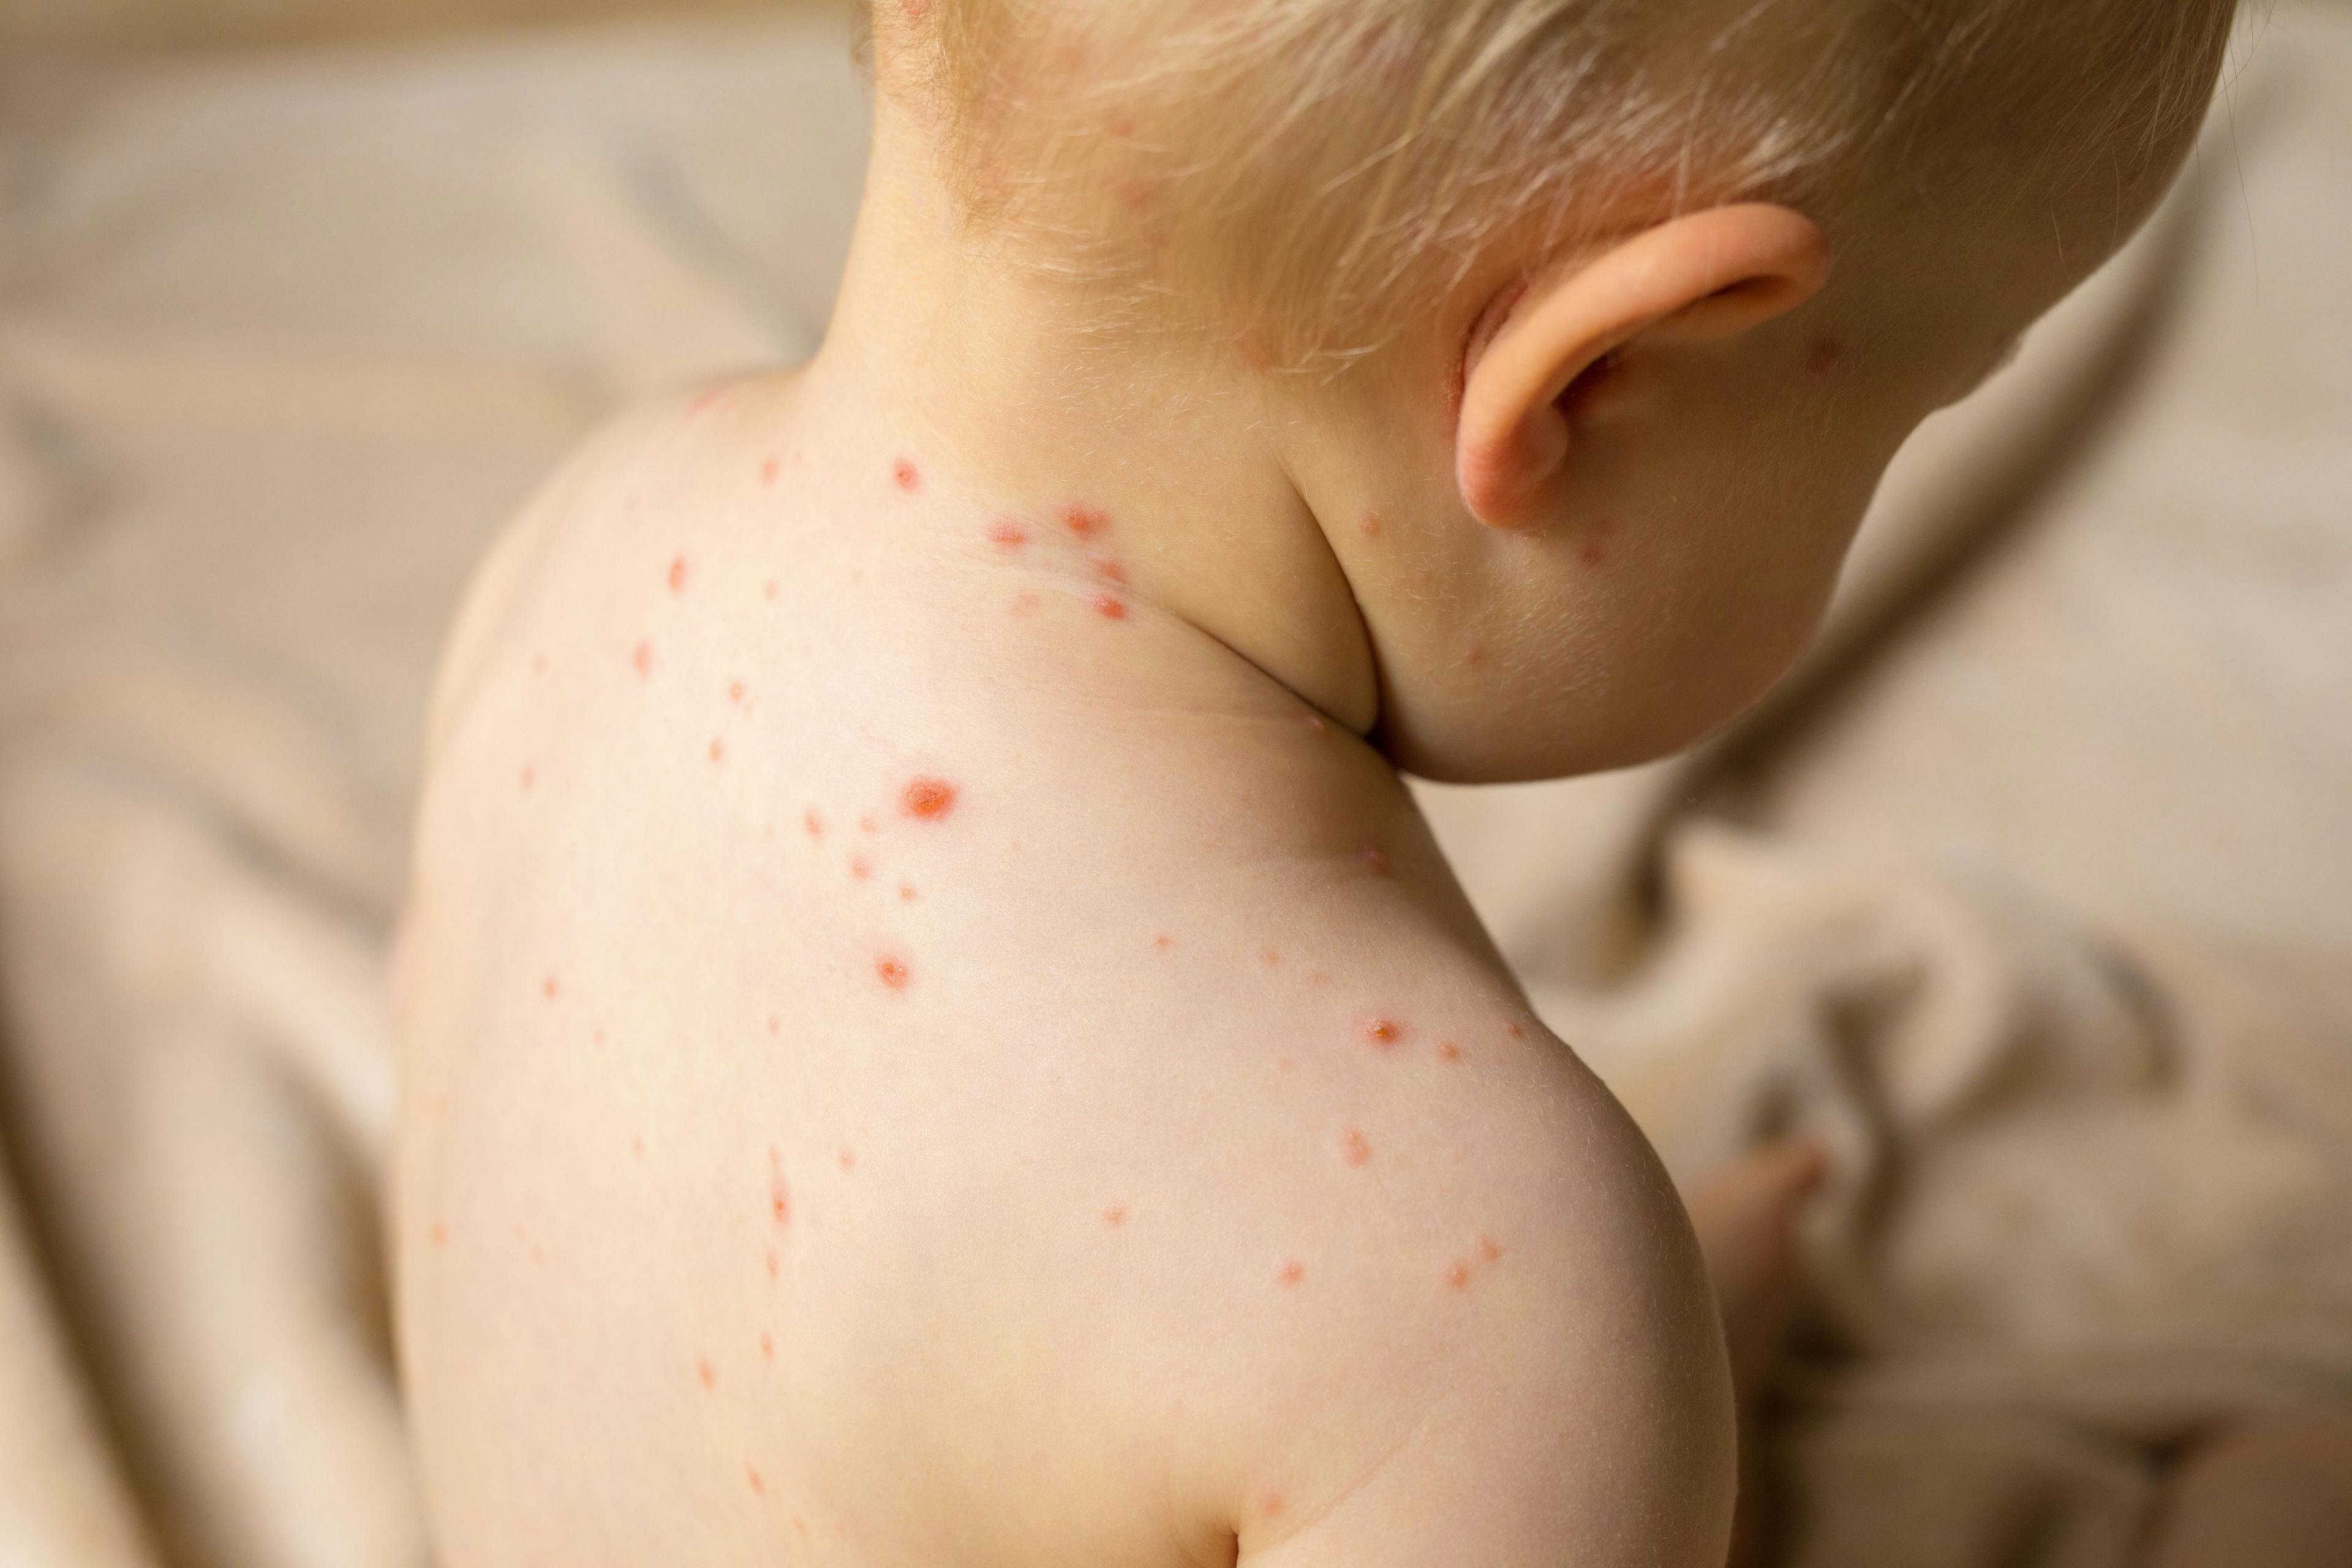 Routine Vaccination Makes Chickenpox Rare in United States